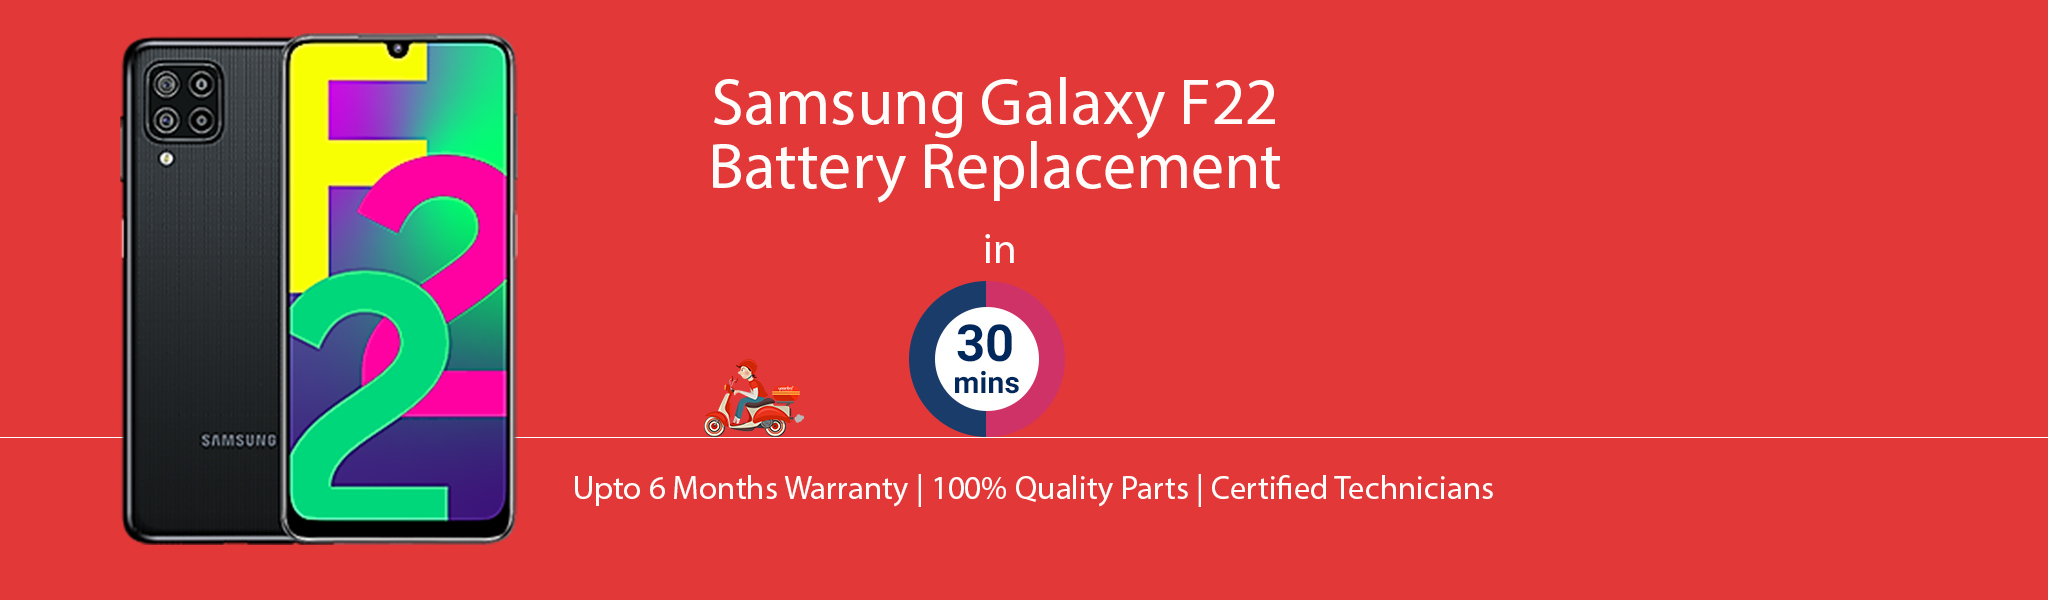 samsung-galaxy-f22-battery-replacement.jpg